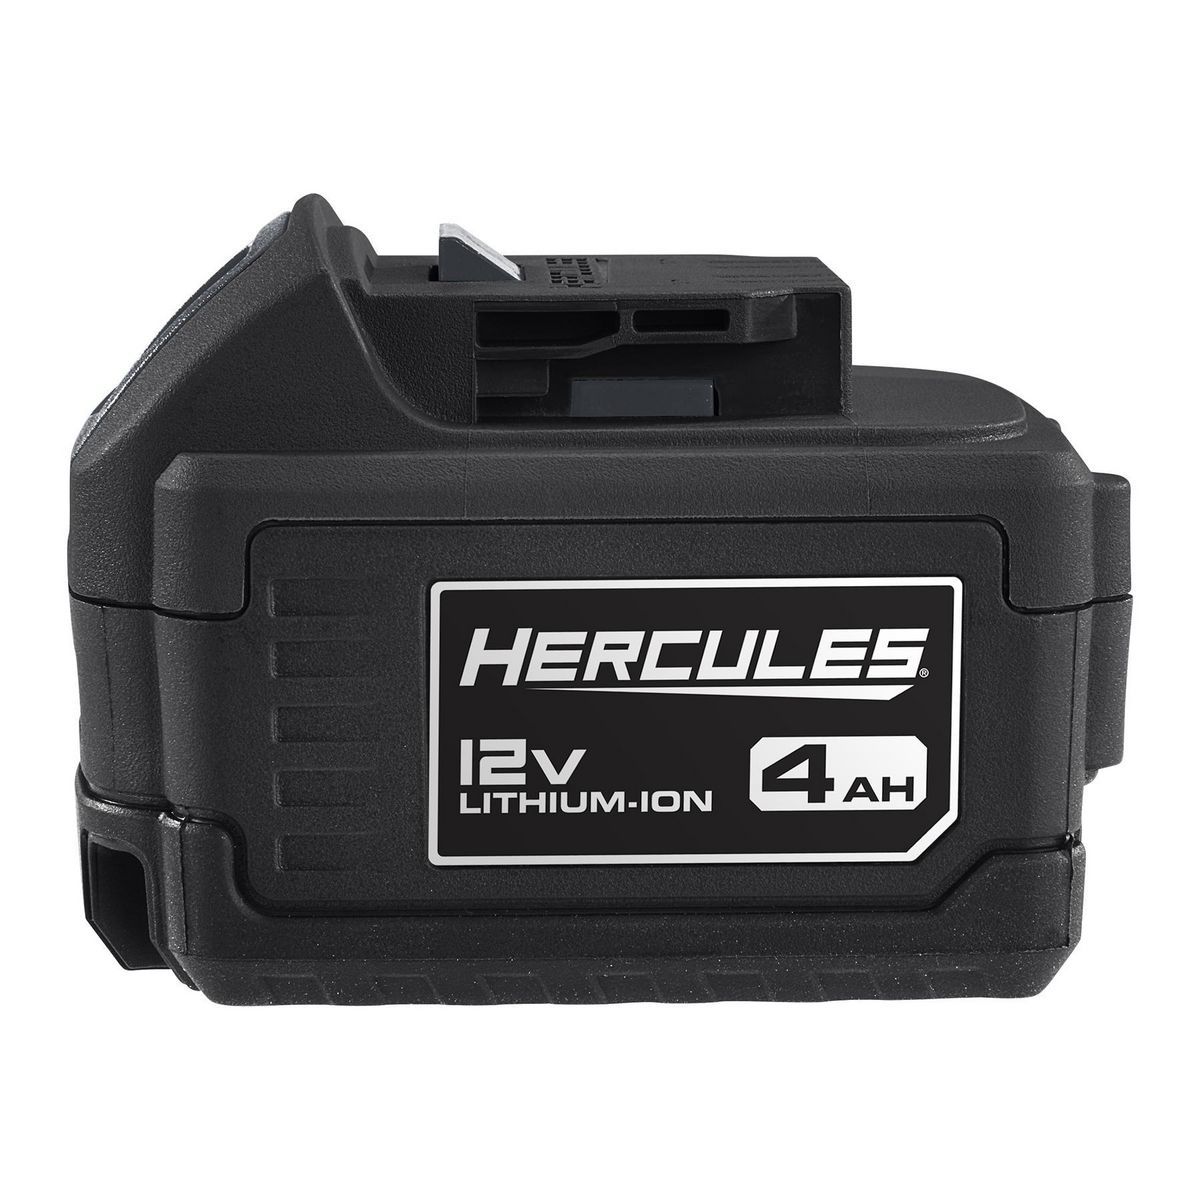 Hercules 12V 4.0 Ah Lithium-Ion Compact Lightweight Battery